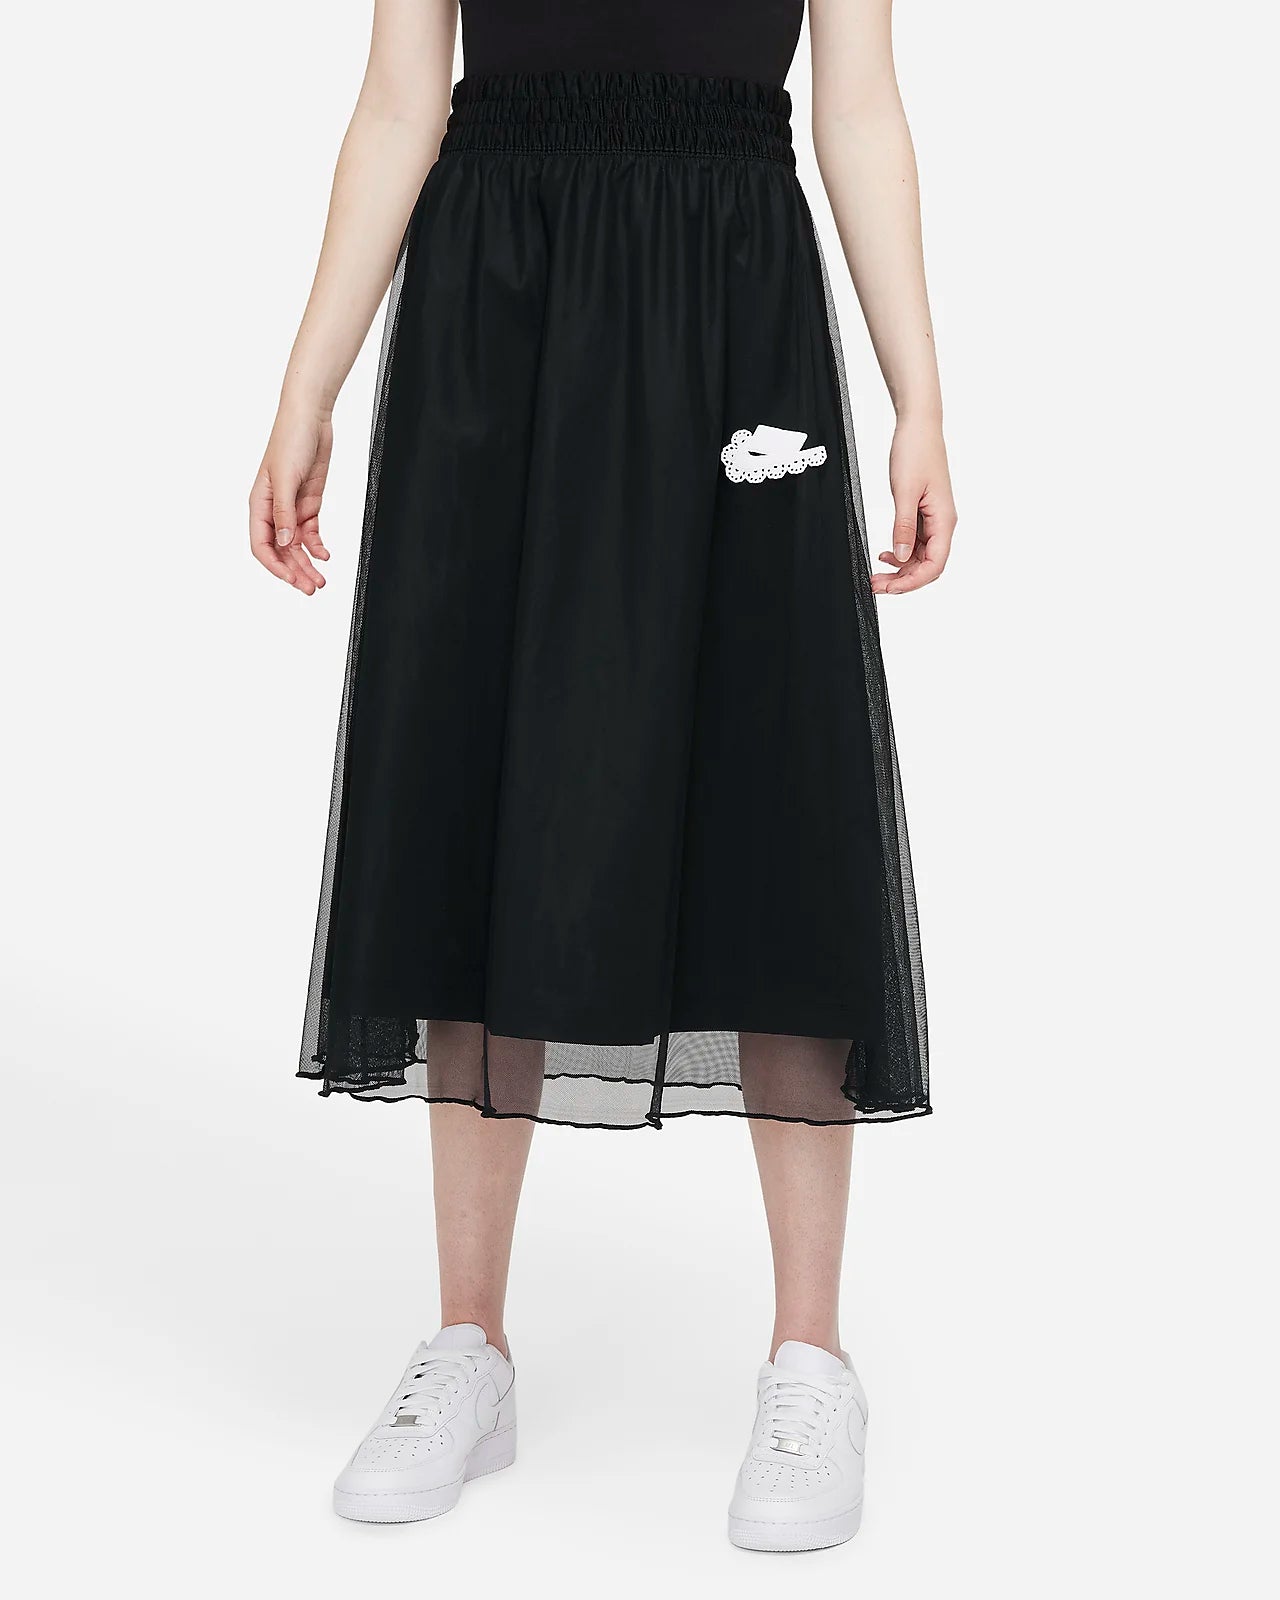 Nike Black Tulle Skirt Size Small